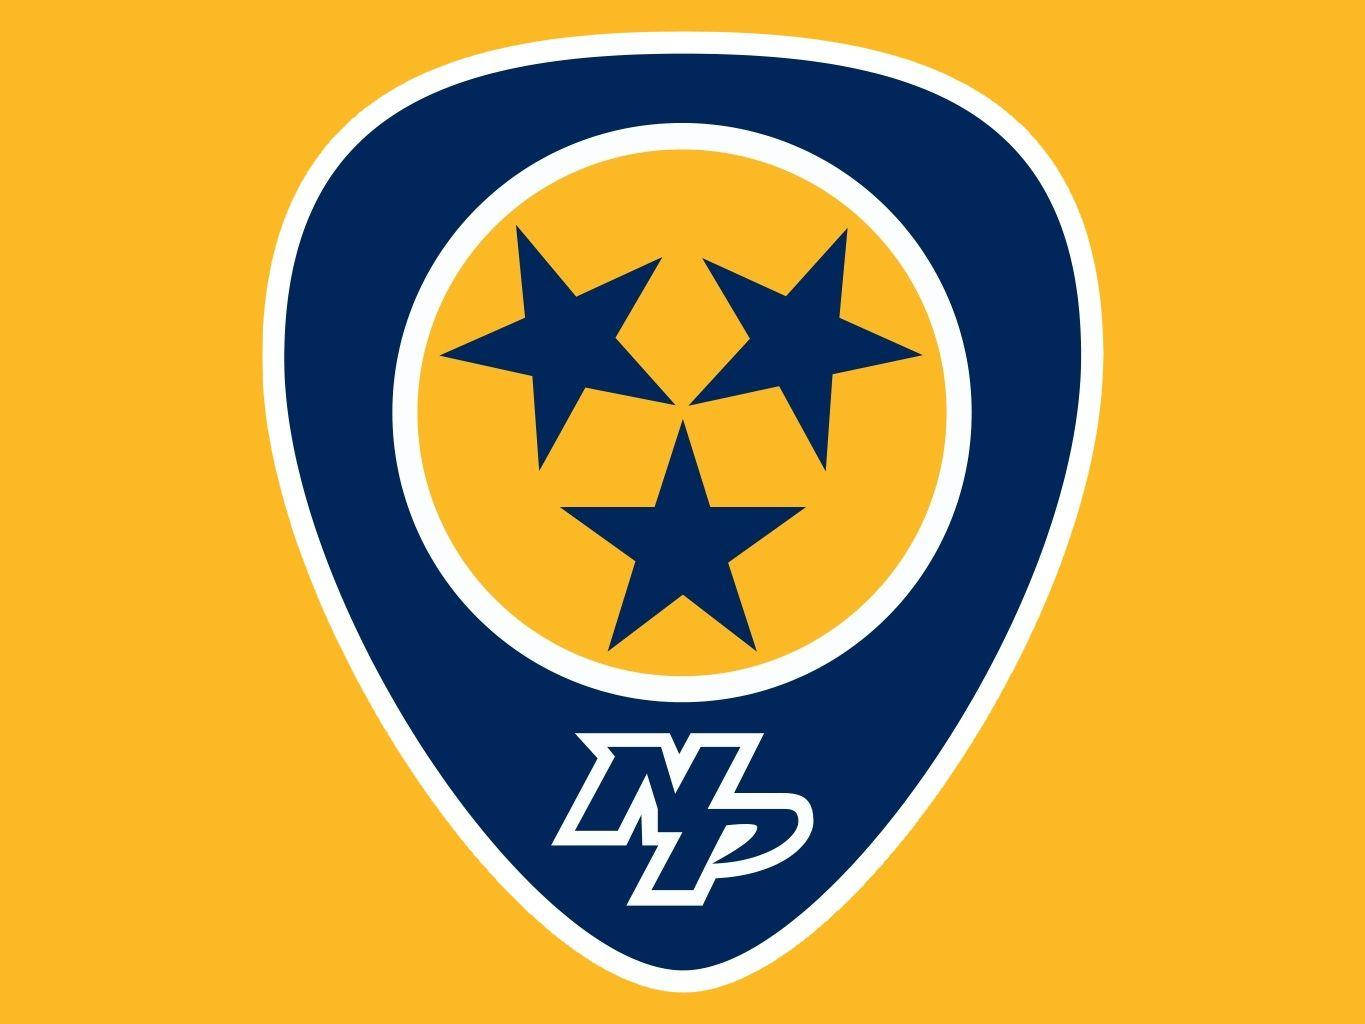 Nashville Predators' Logo Depicted In The Golden Ball And Stars. Background